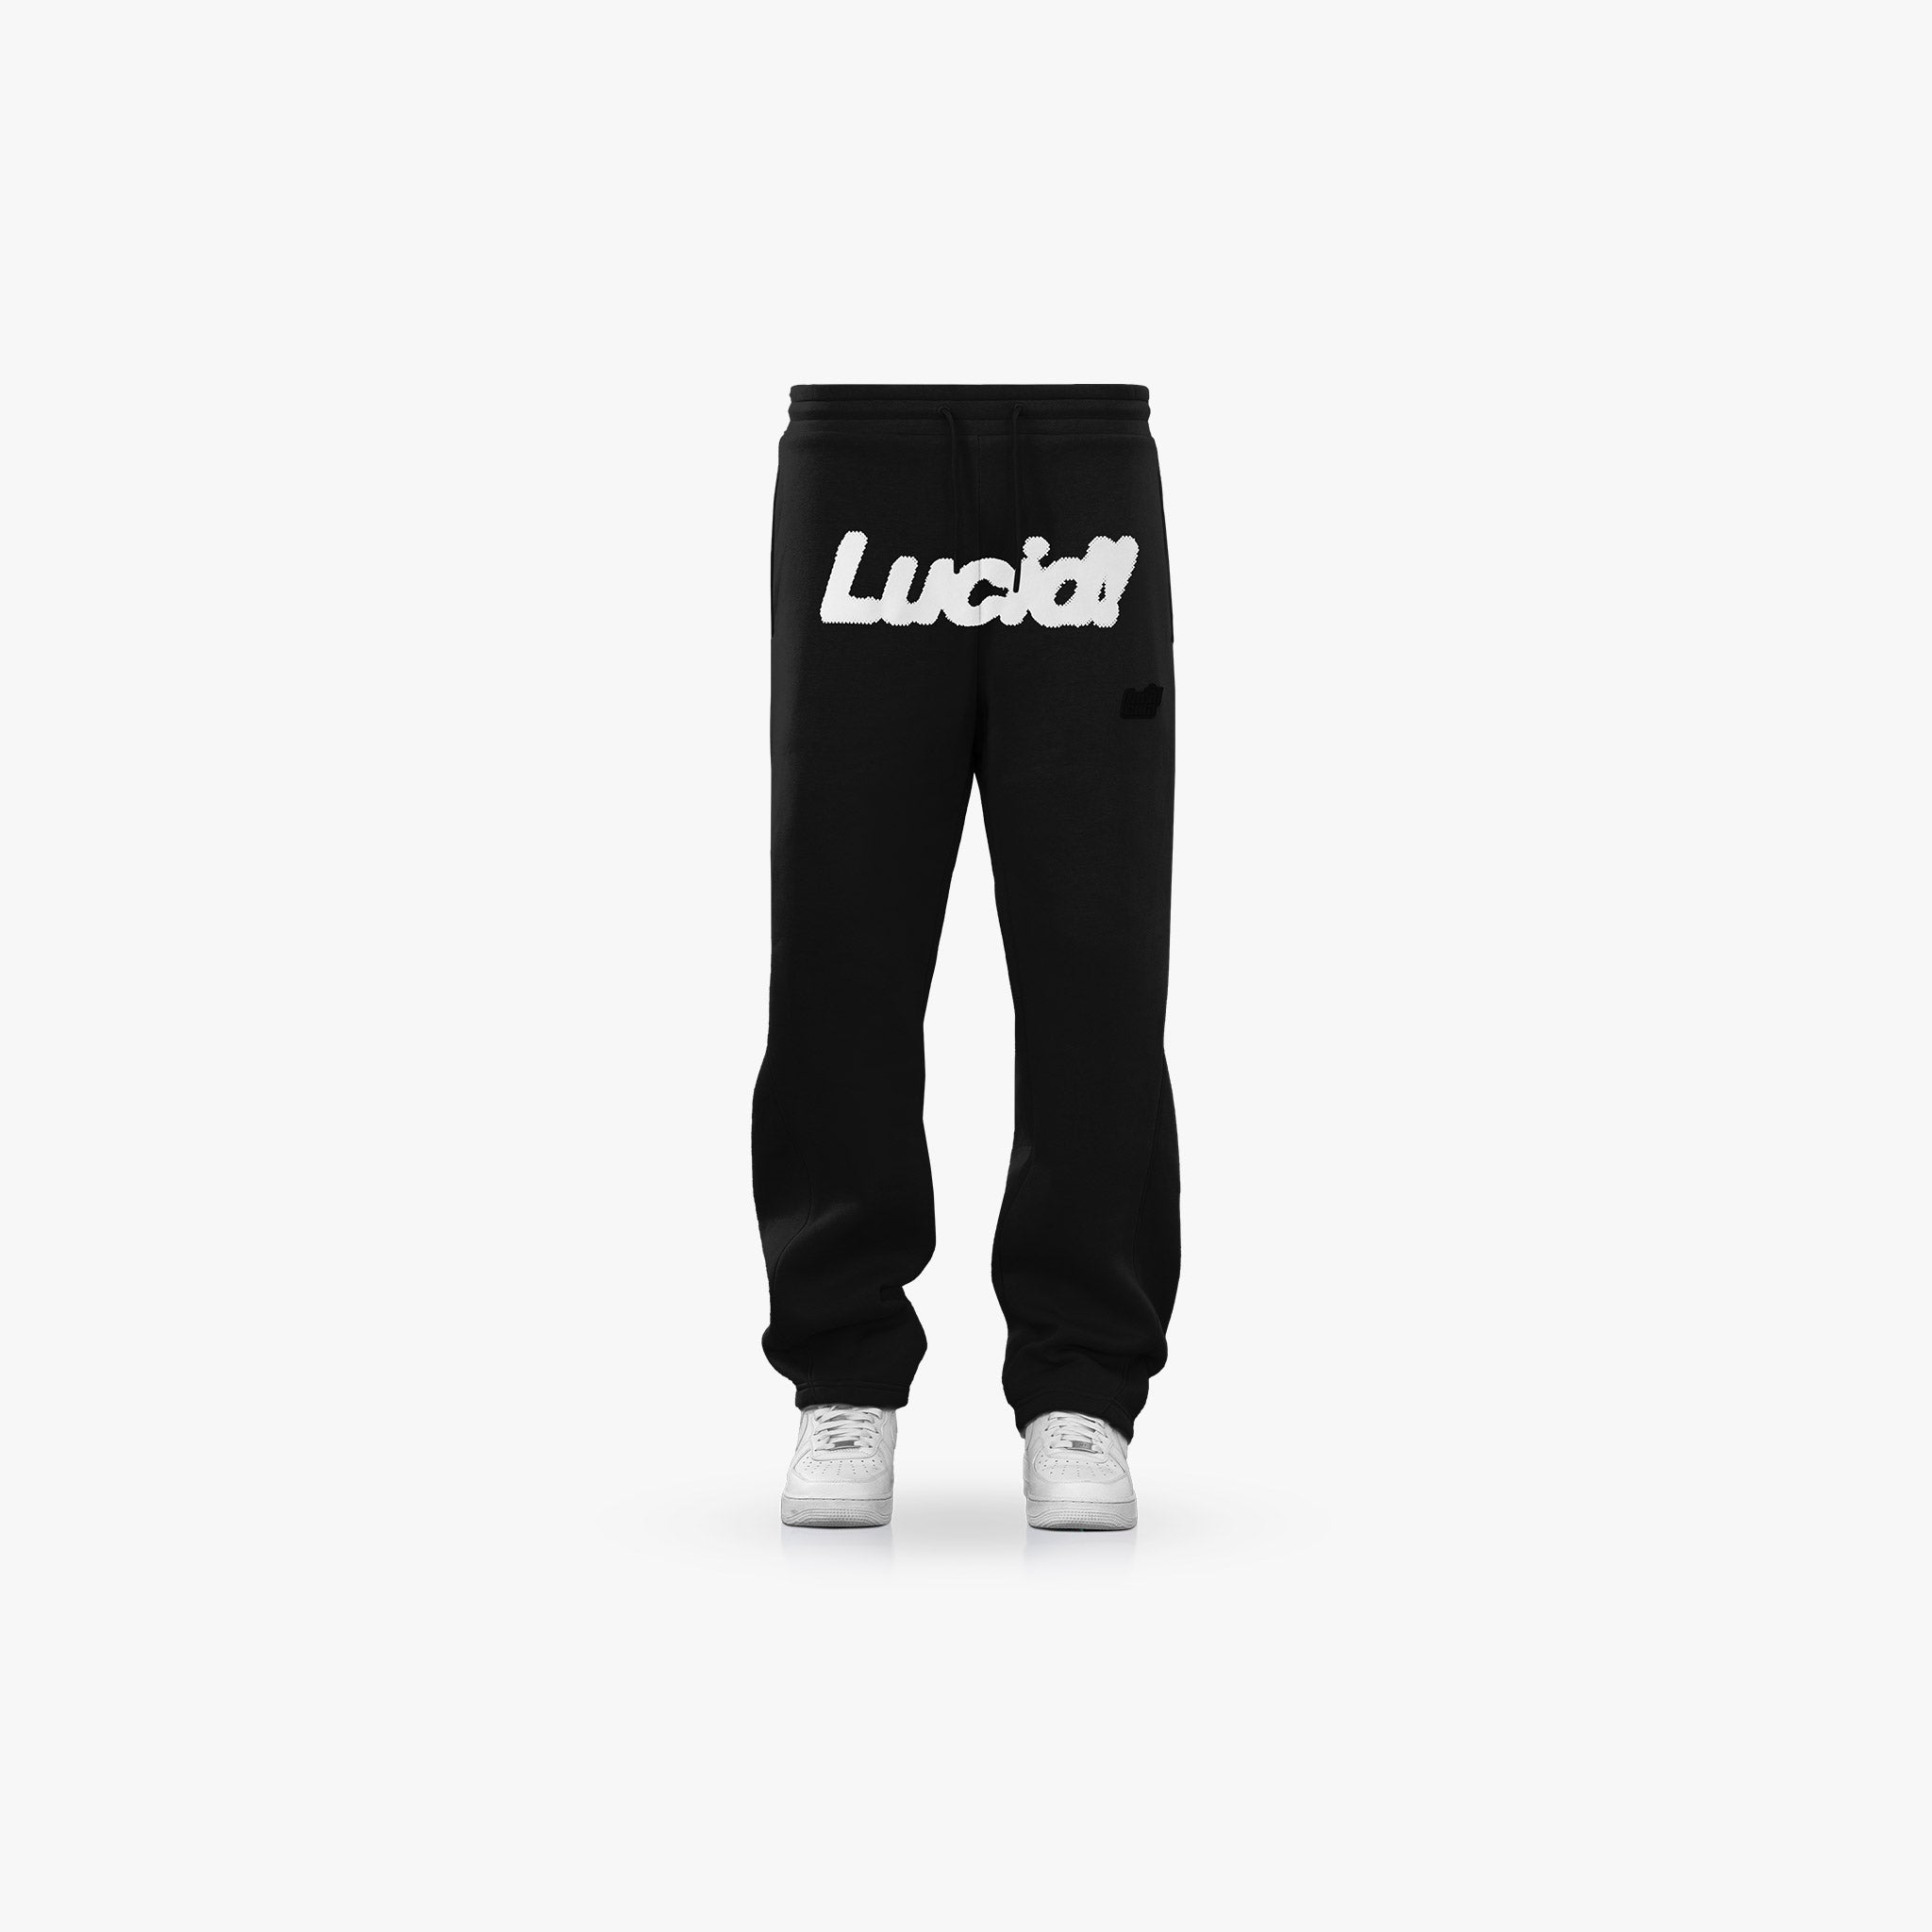 Lucid! Sweatpants Black/White - Lucid Club